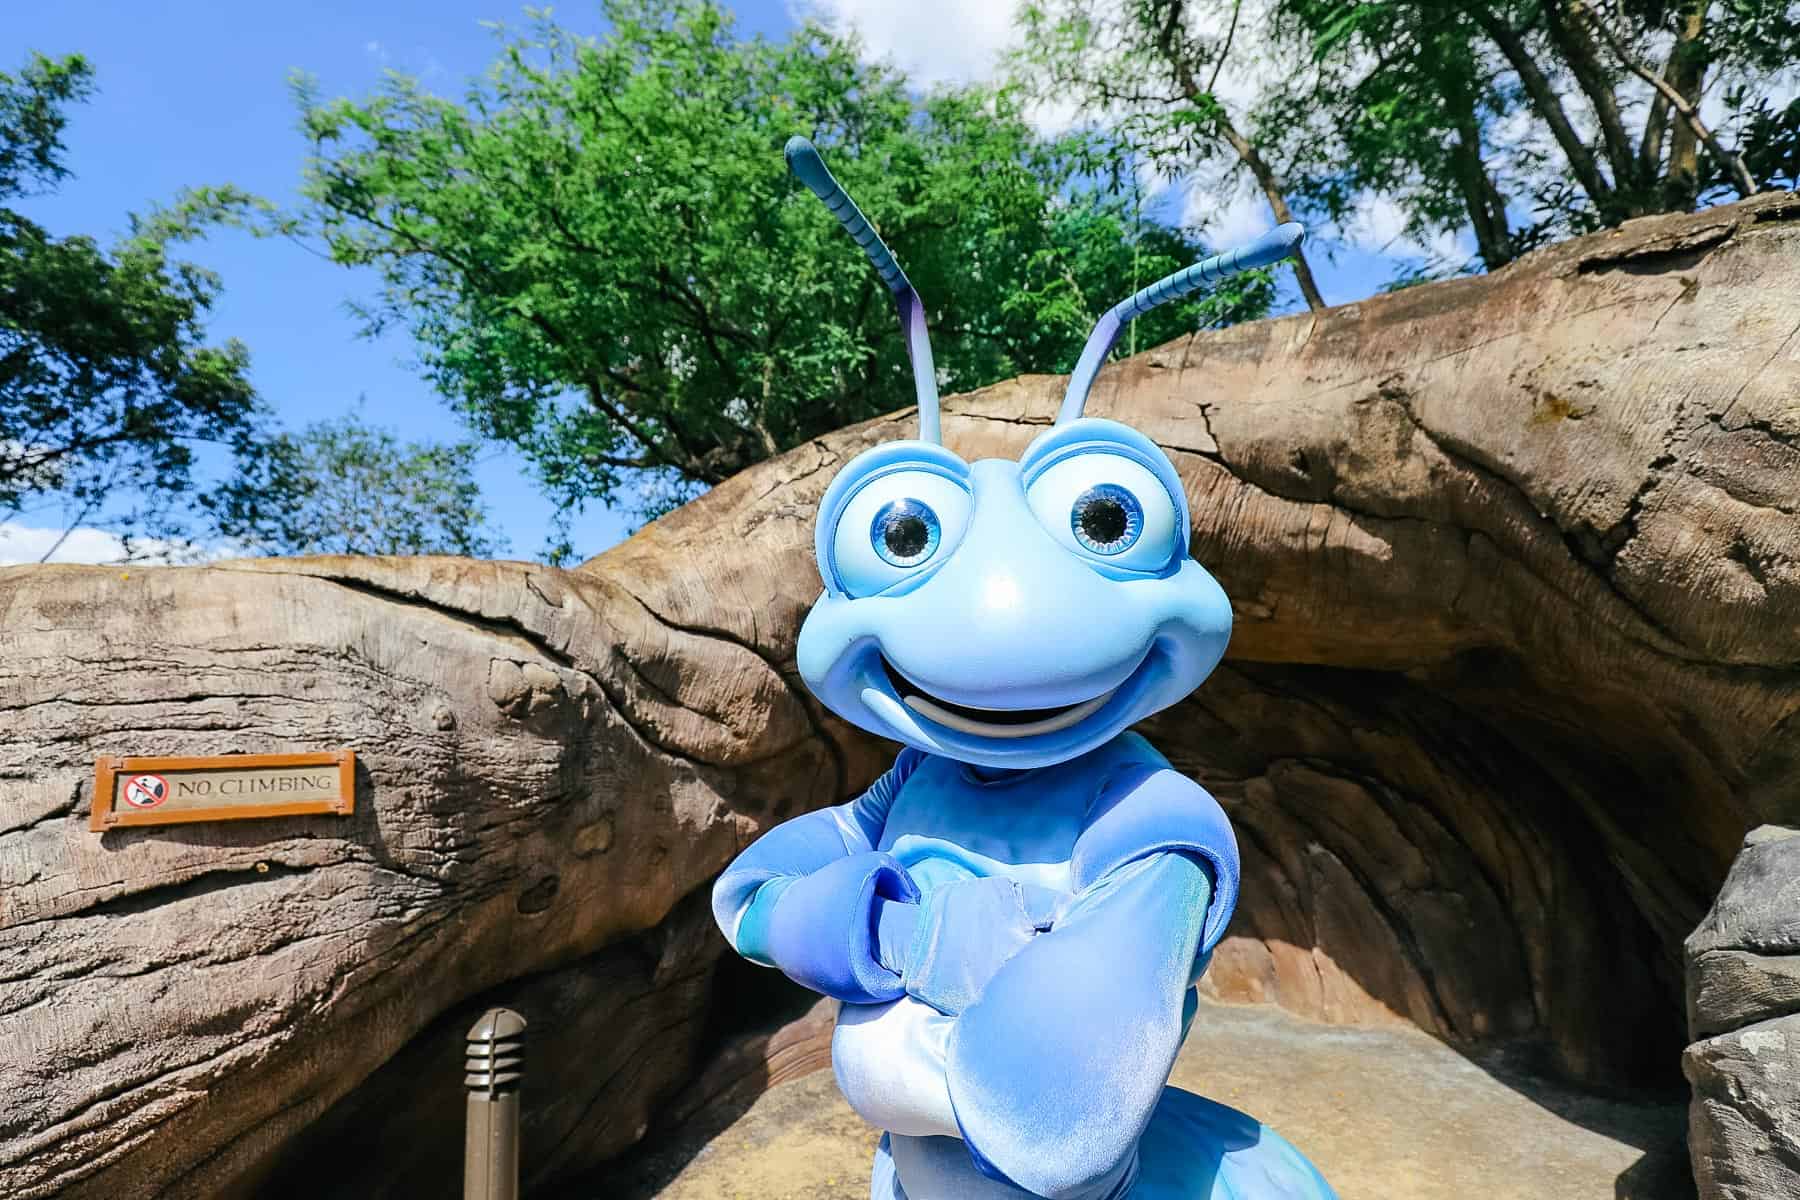 Flik surprises guests at Disney's Animal Kingdom